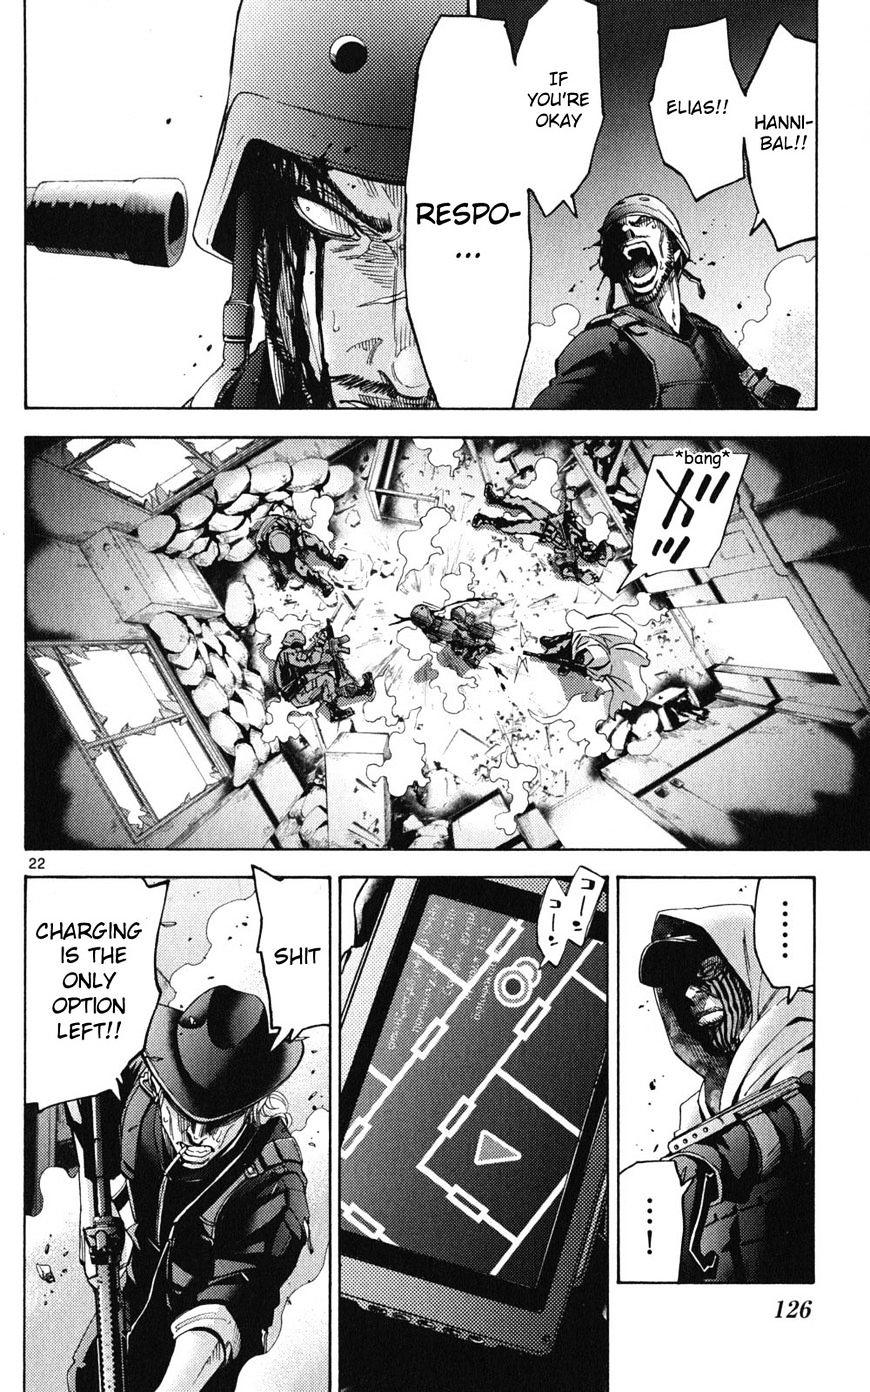 Imawa No Kuni No Alice Chapter 49.1 : Side Story 5 - King Of Spades (1) page 20 - Mangakakalot